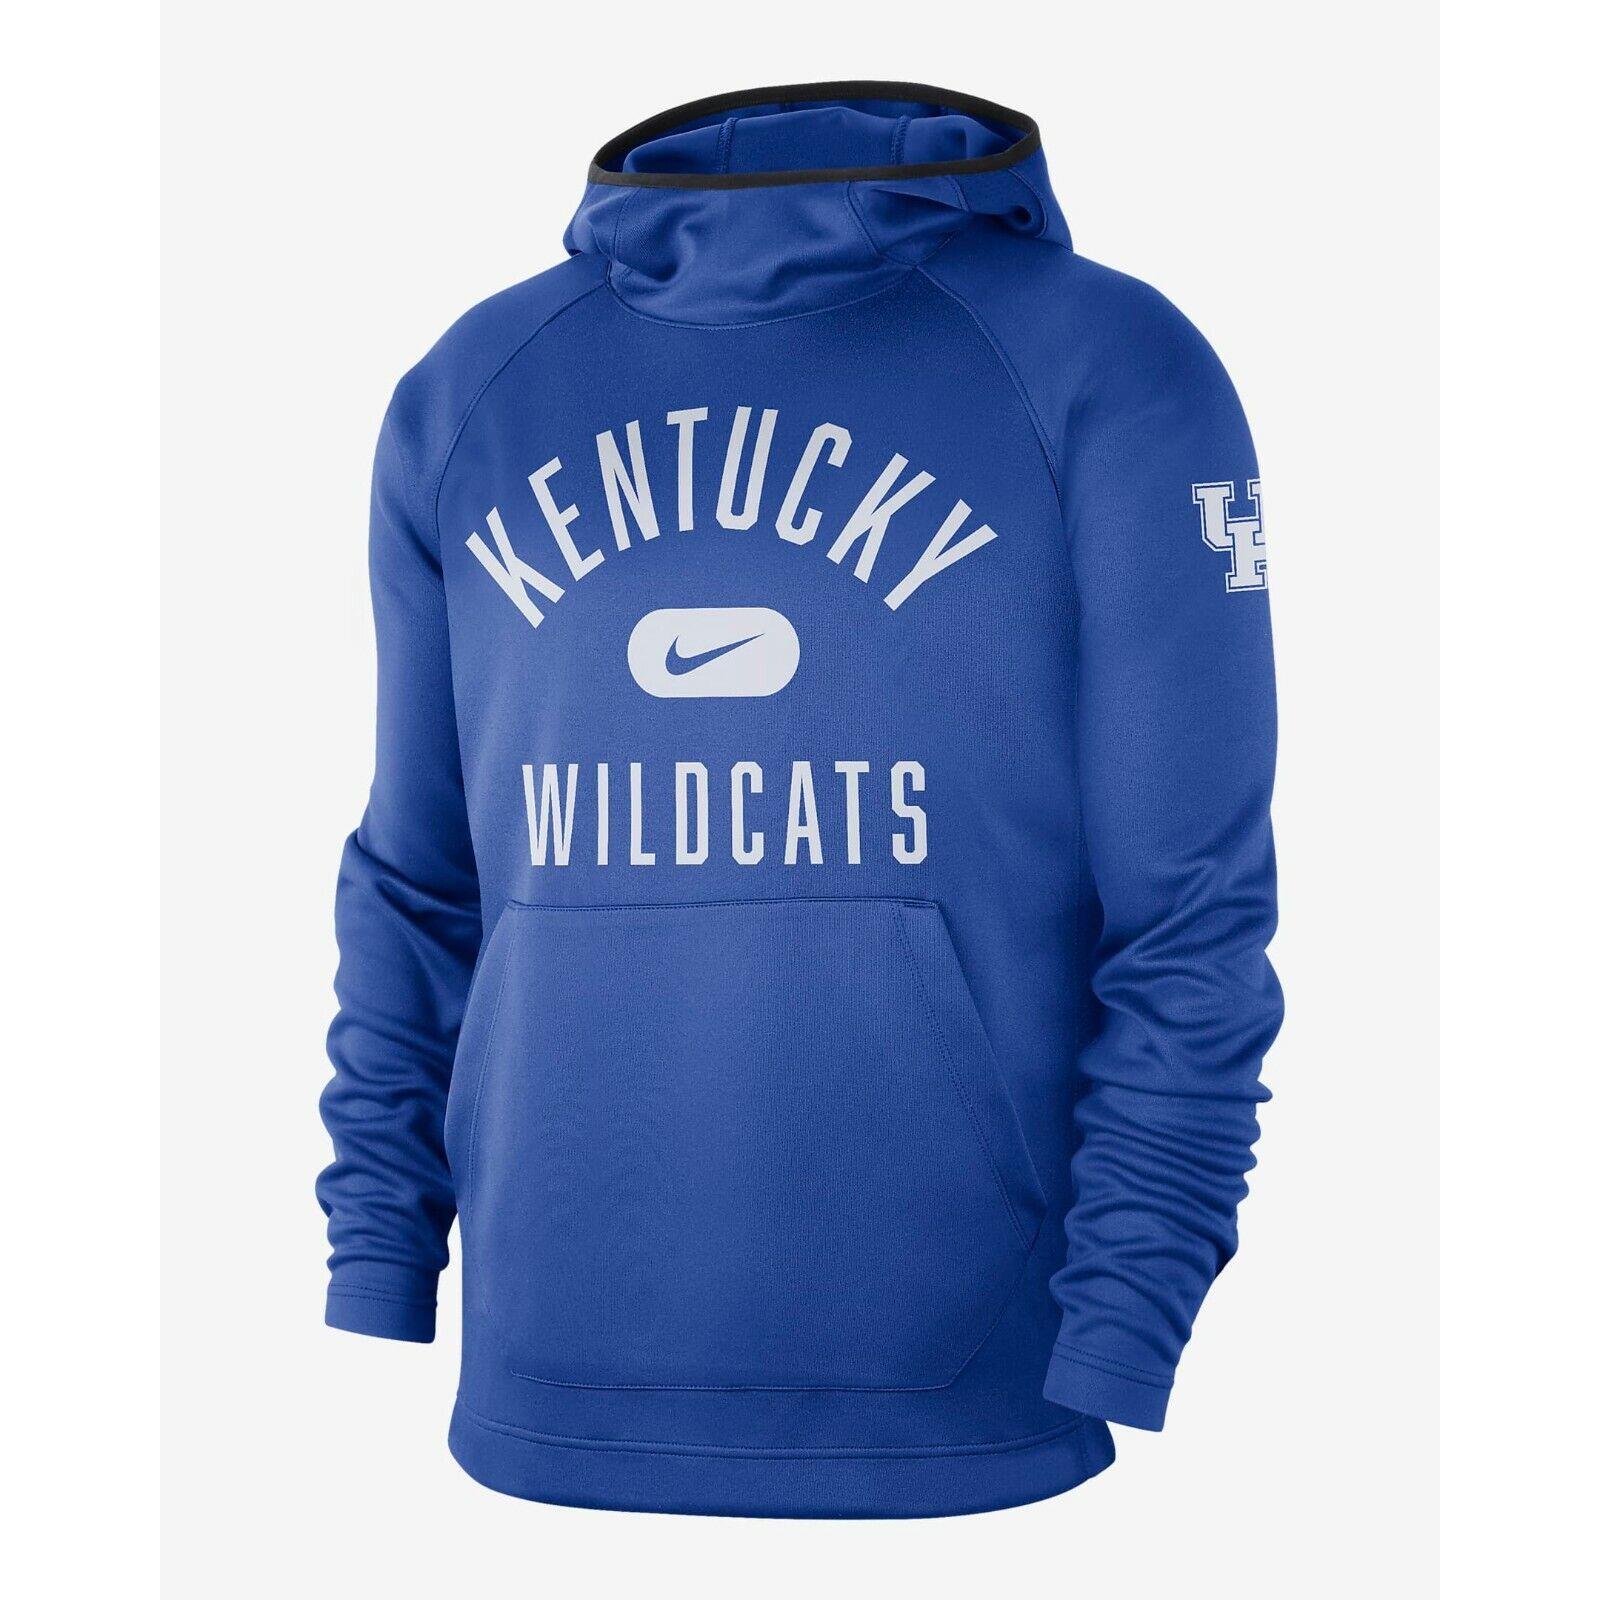 Mens Nike Dri-fit Kentucky Wildcats Blue Hoodie Sweatshirt S-3XL